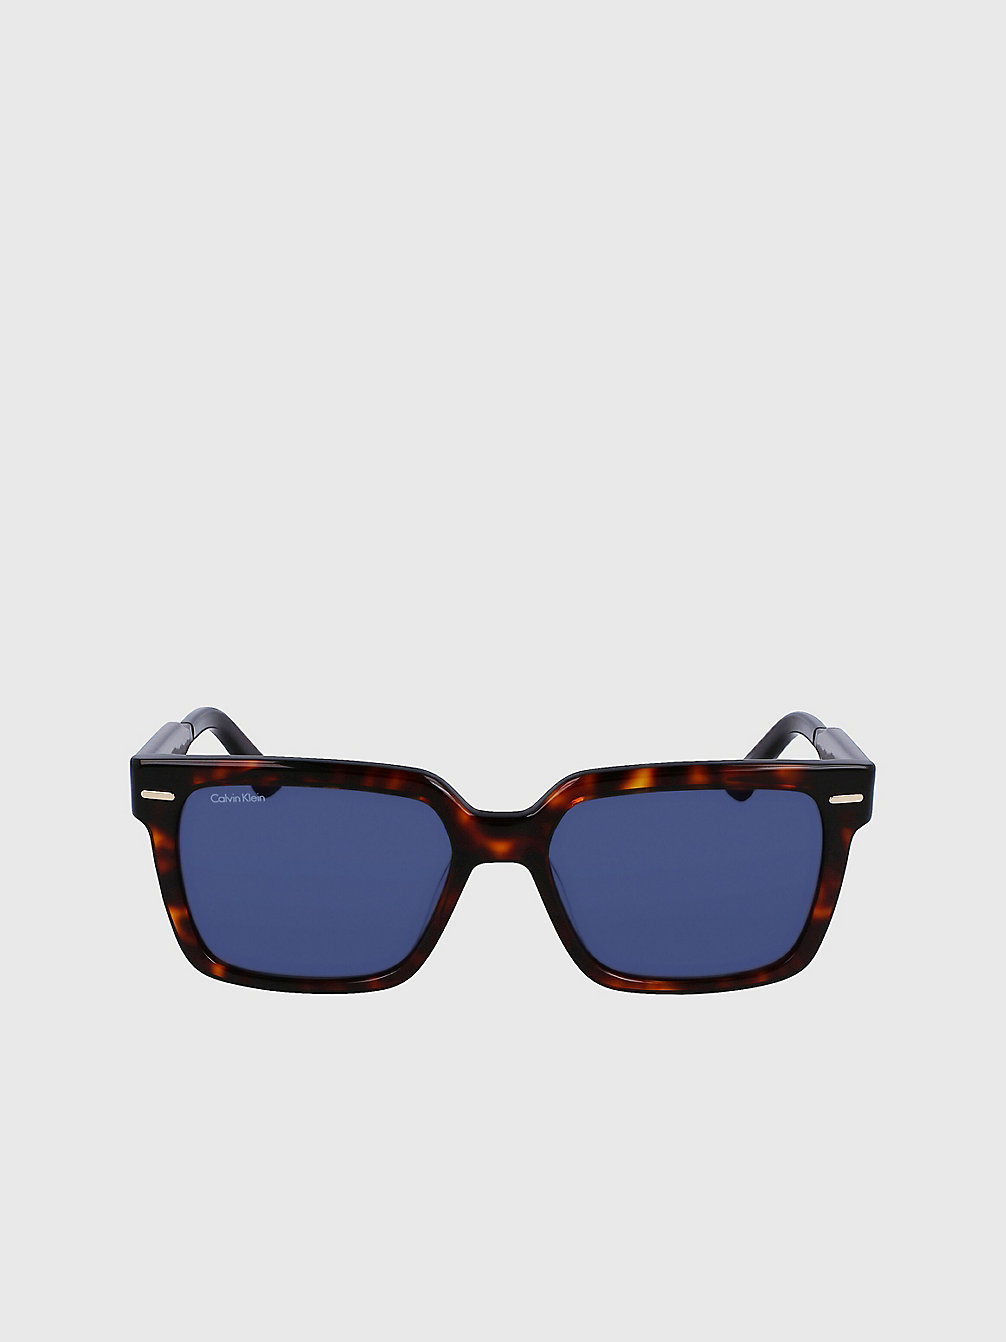 DARK HAVANA > Прямоугольные солнцезащитные очки Ck22535s > undefined женщины - Calvin Klein